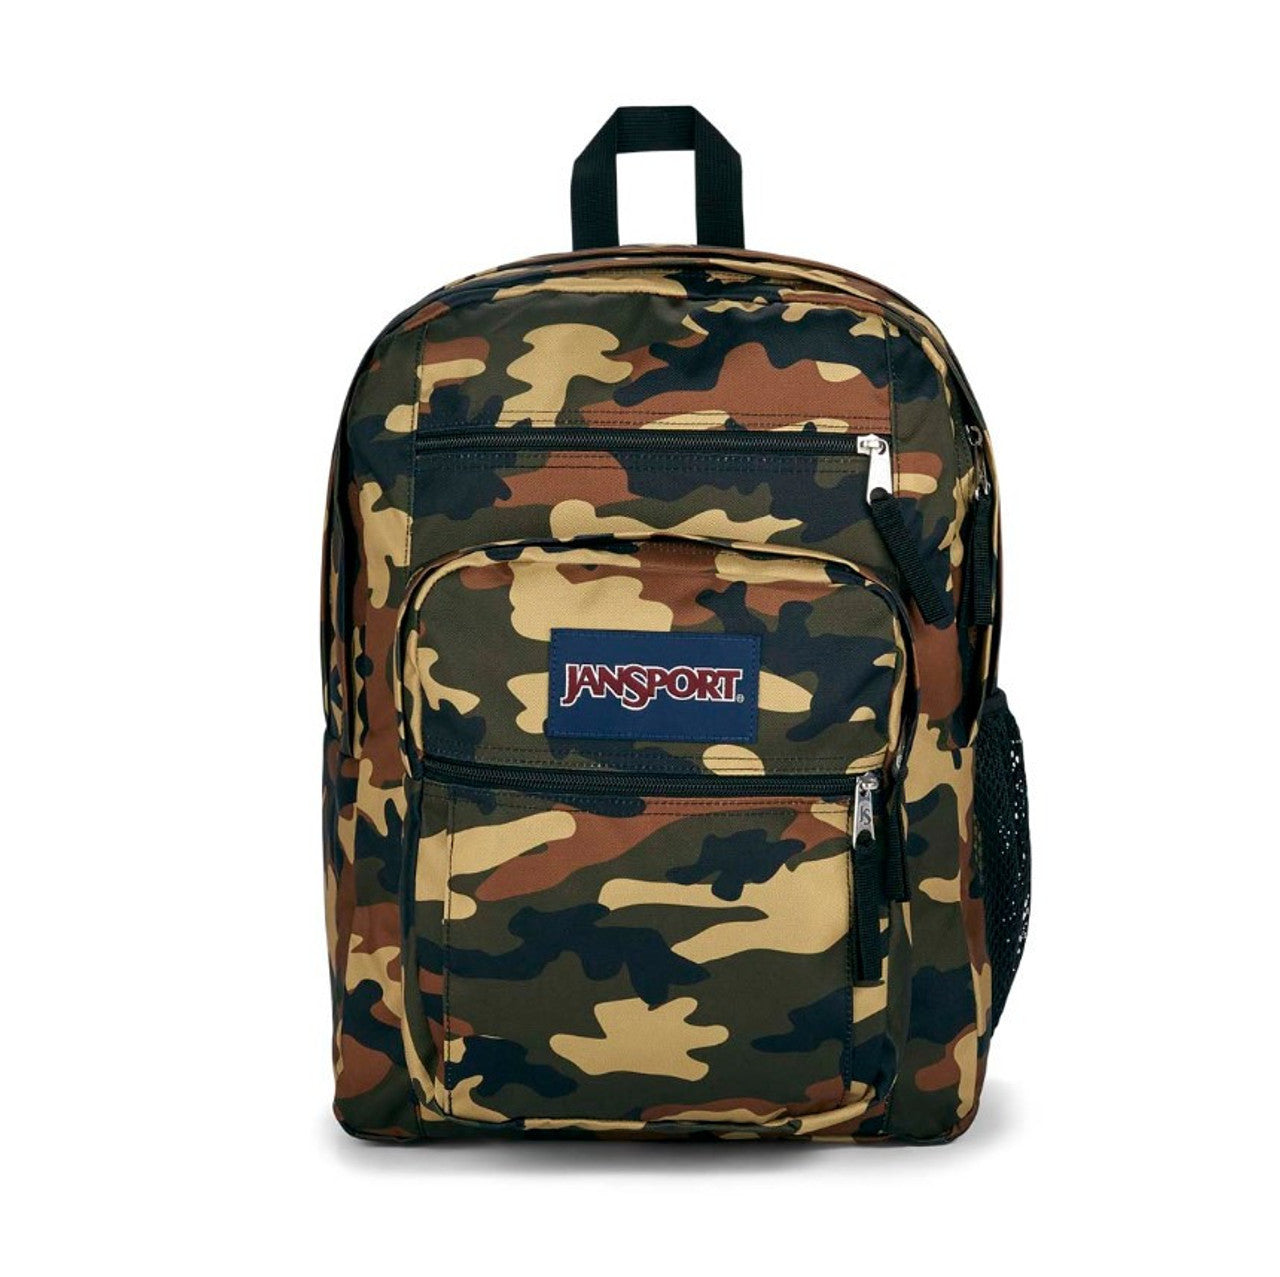 Jansport Backpack, BIG STUDENT, Surplus Camo